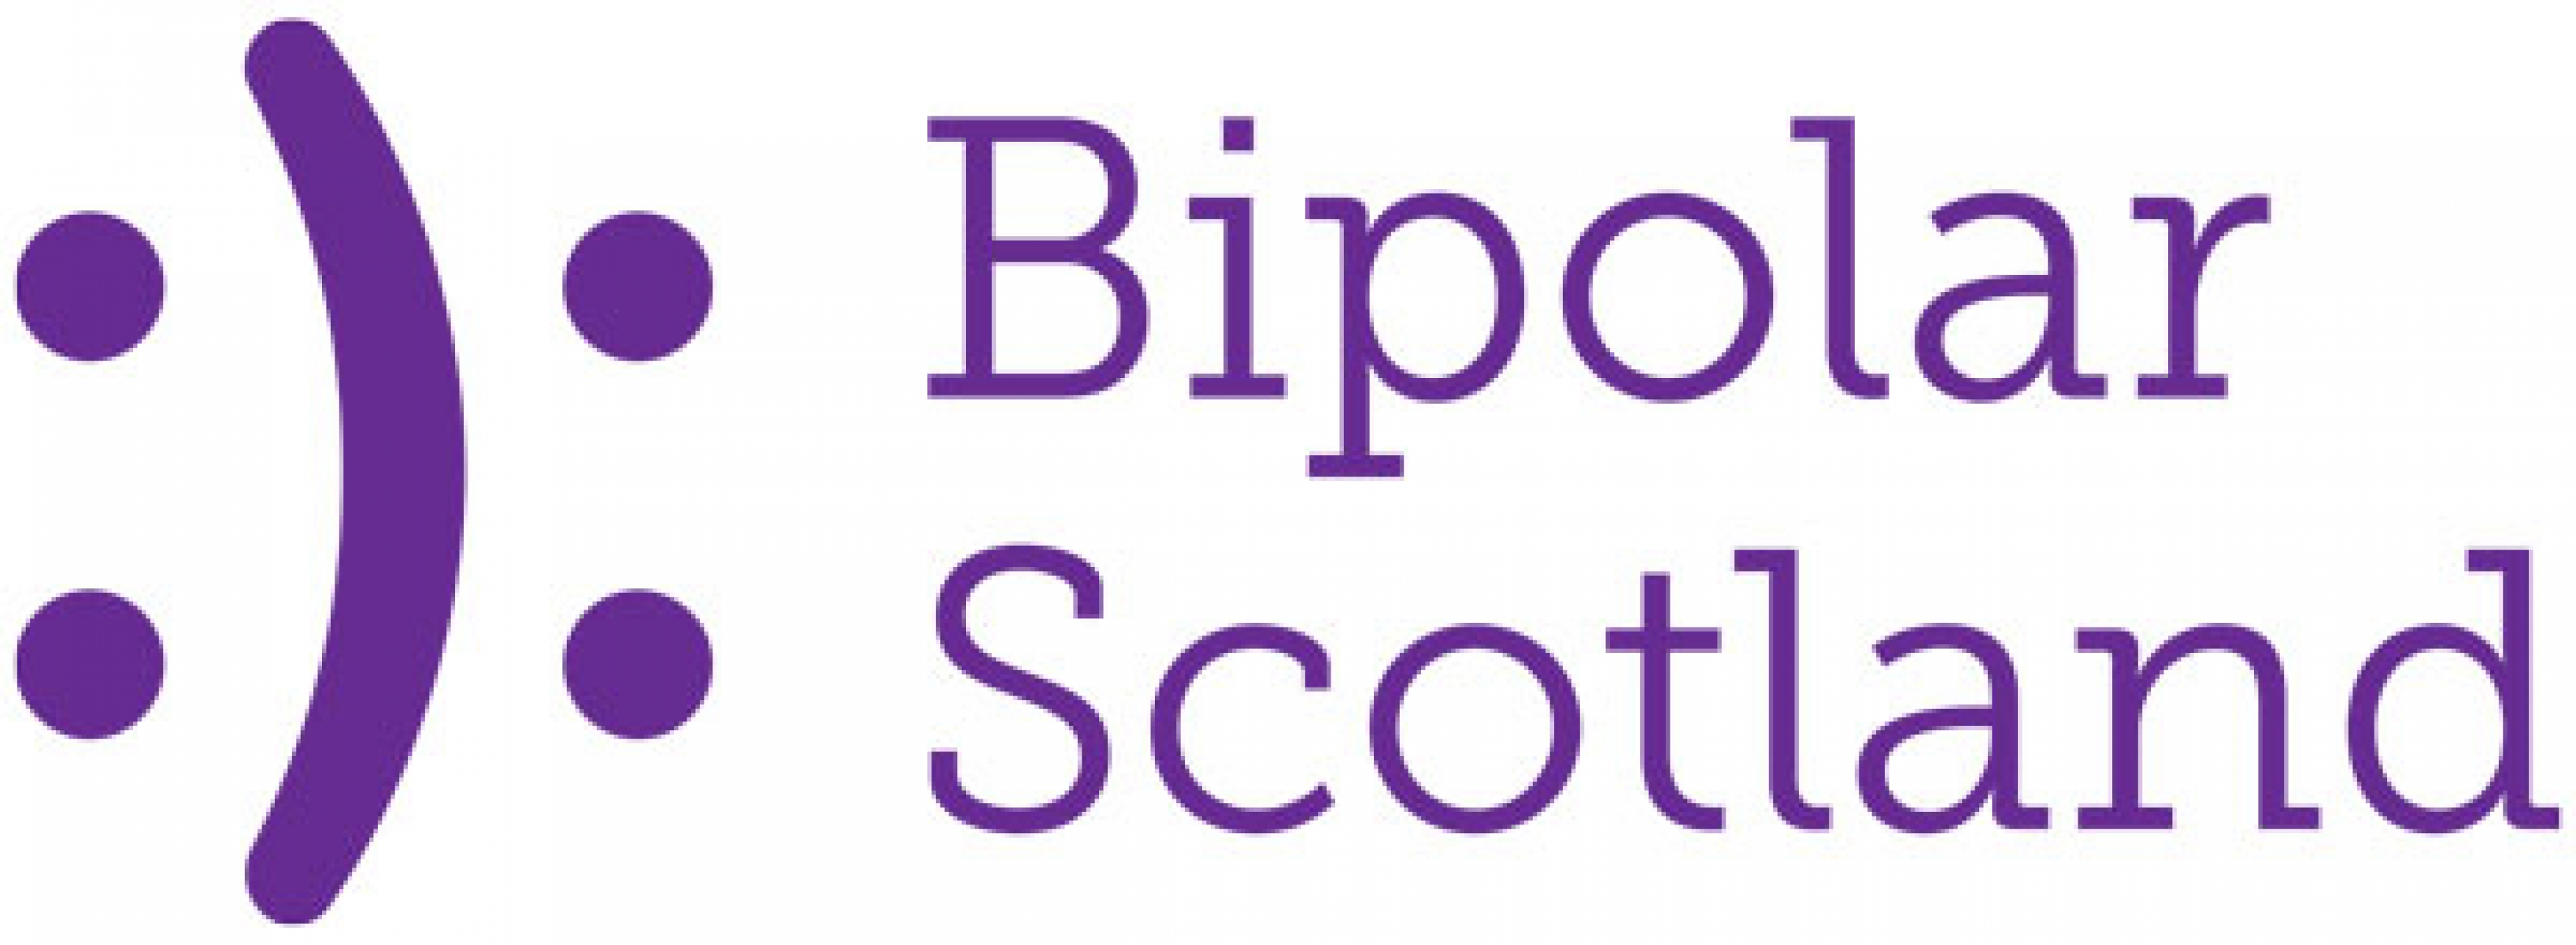 Bipolar Scotland eCards